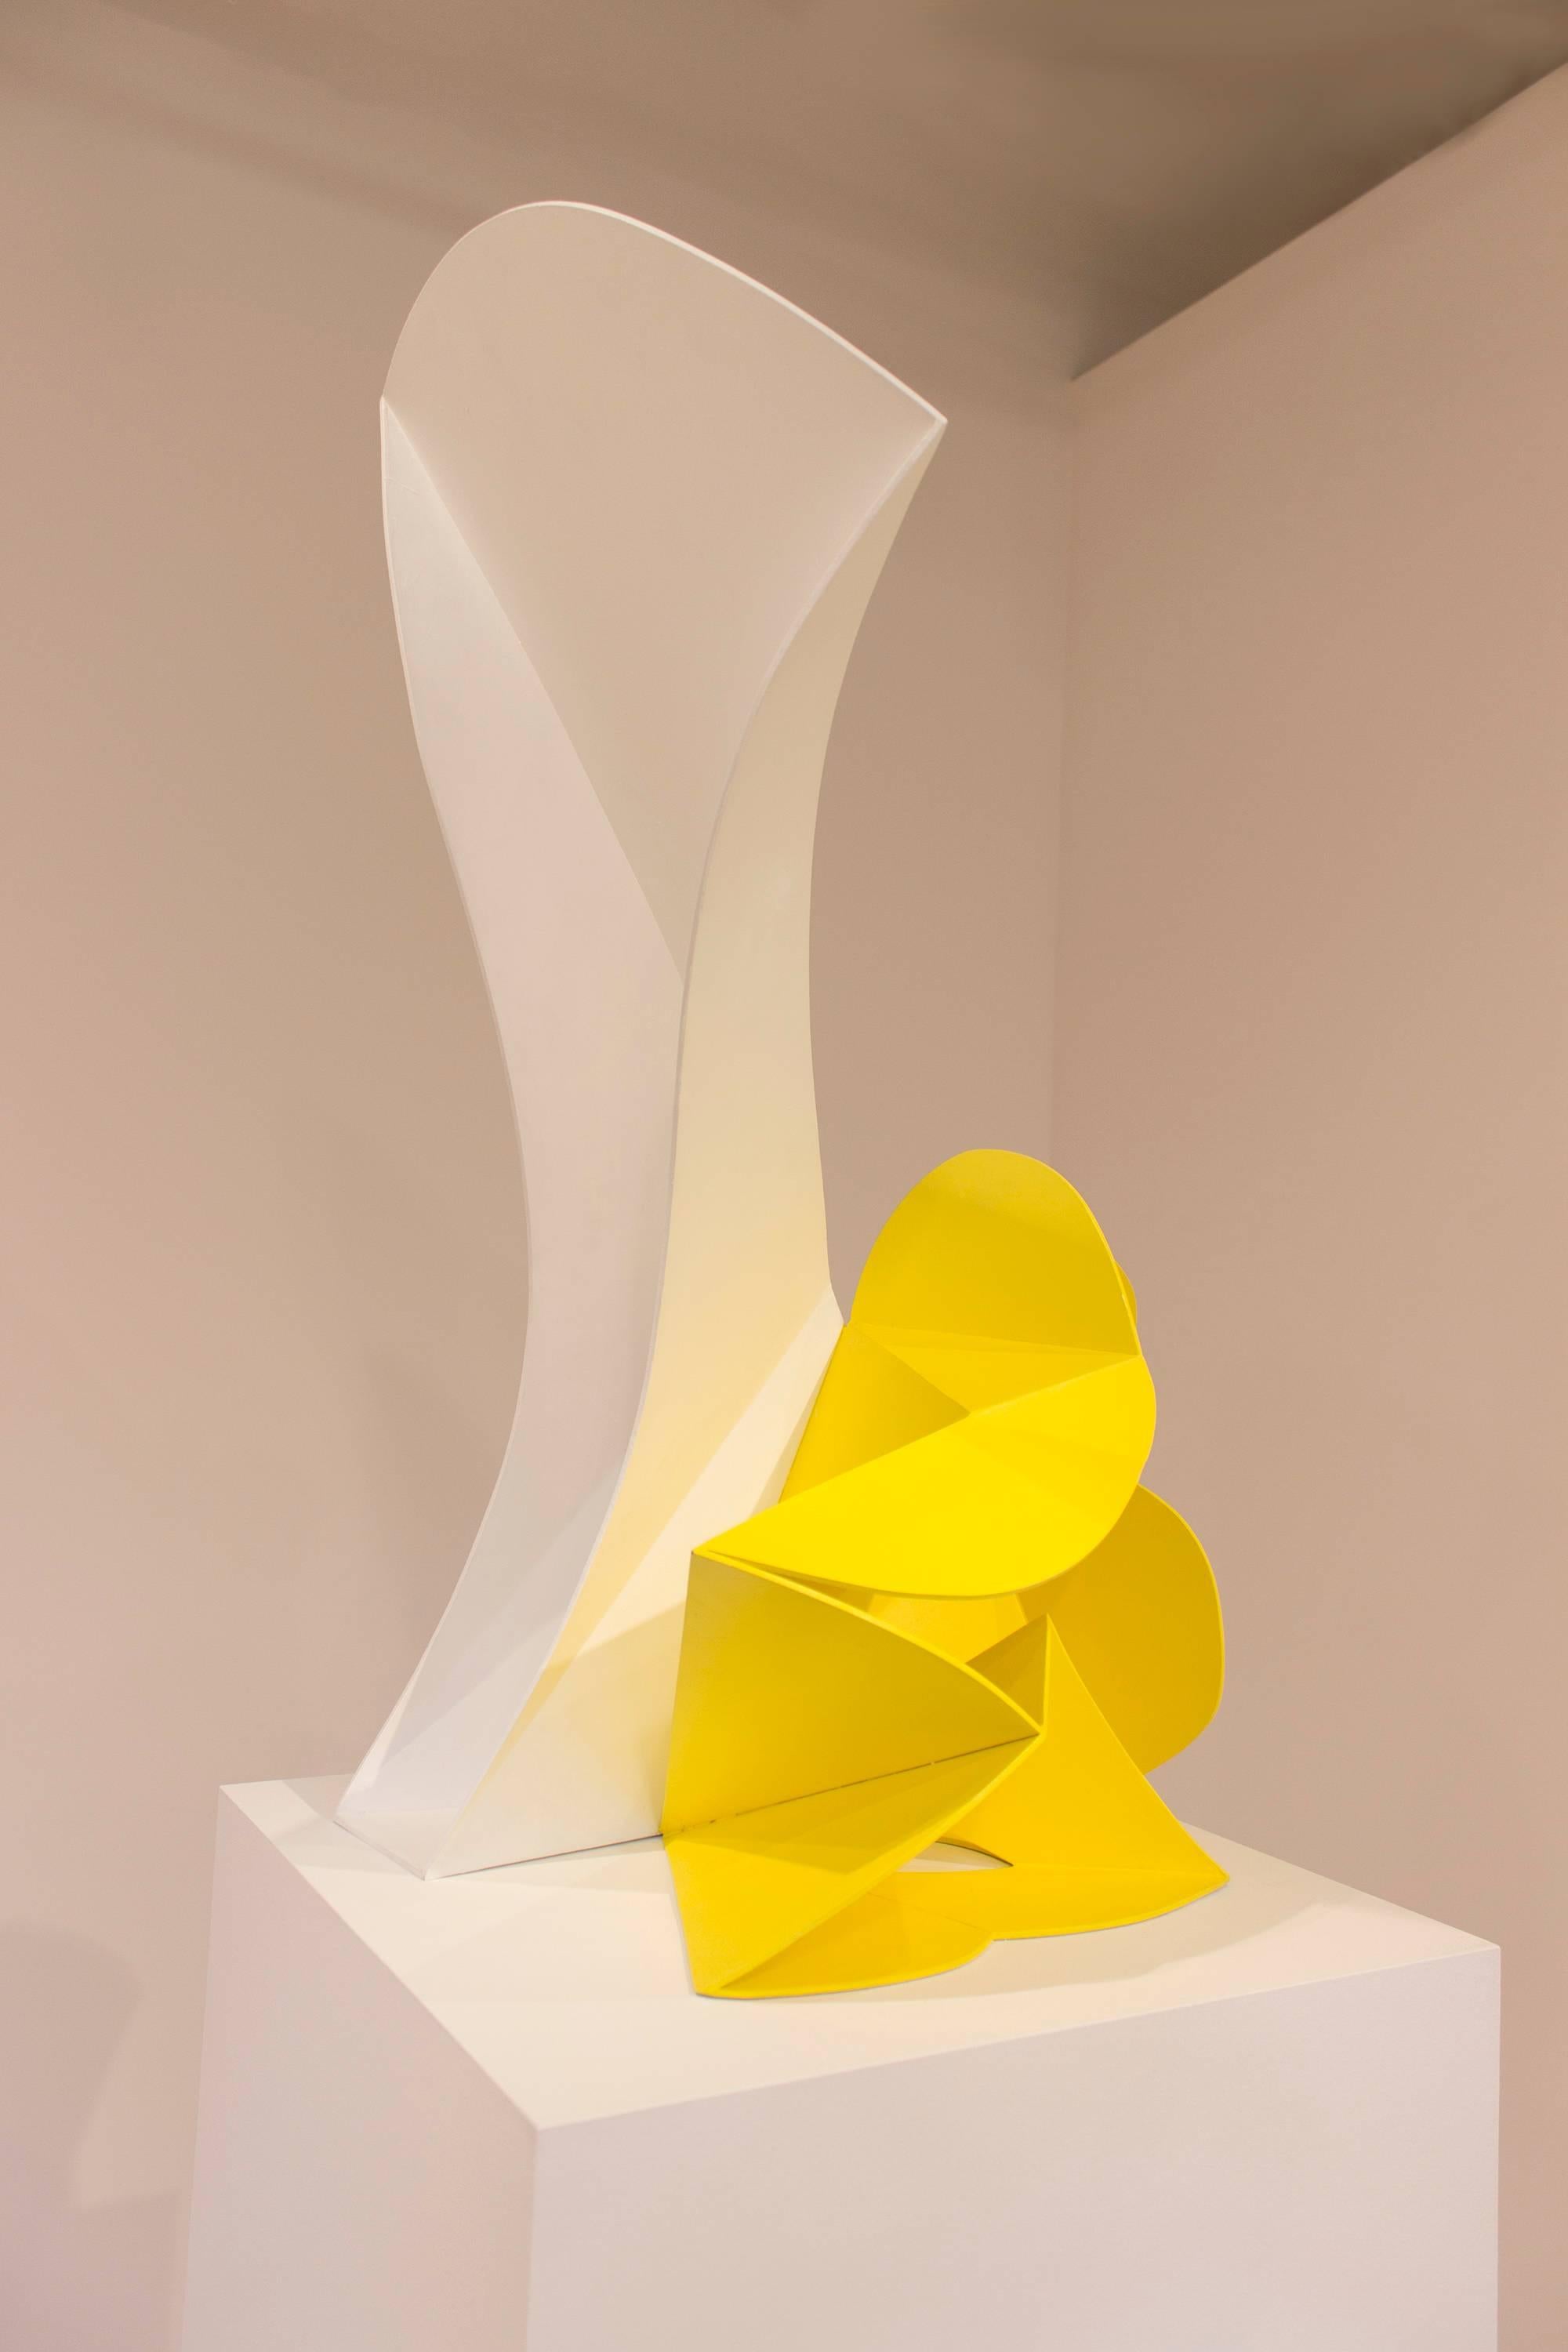 George Sugarman Abstract Sculpture - Flourish